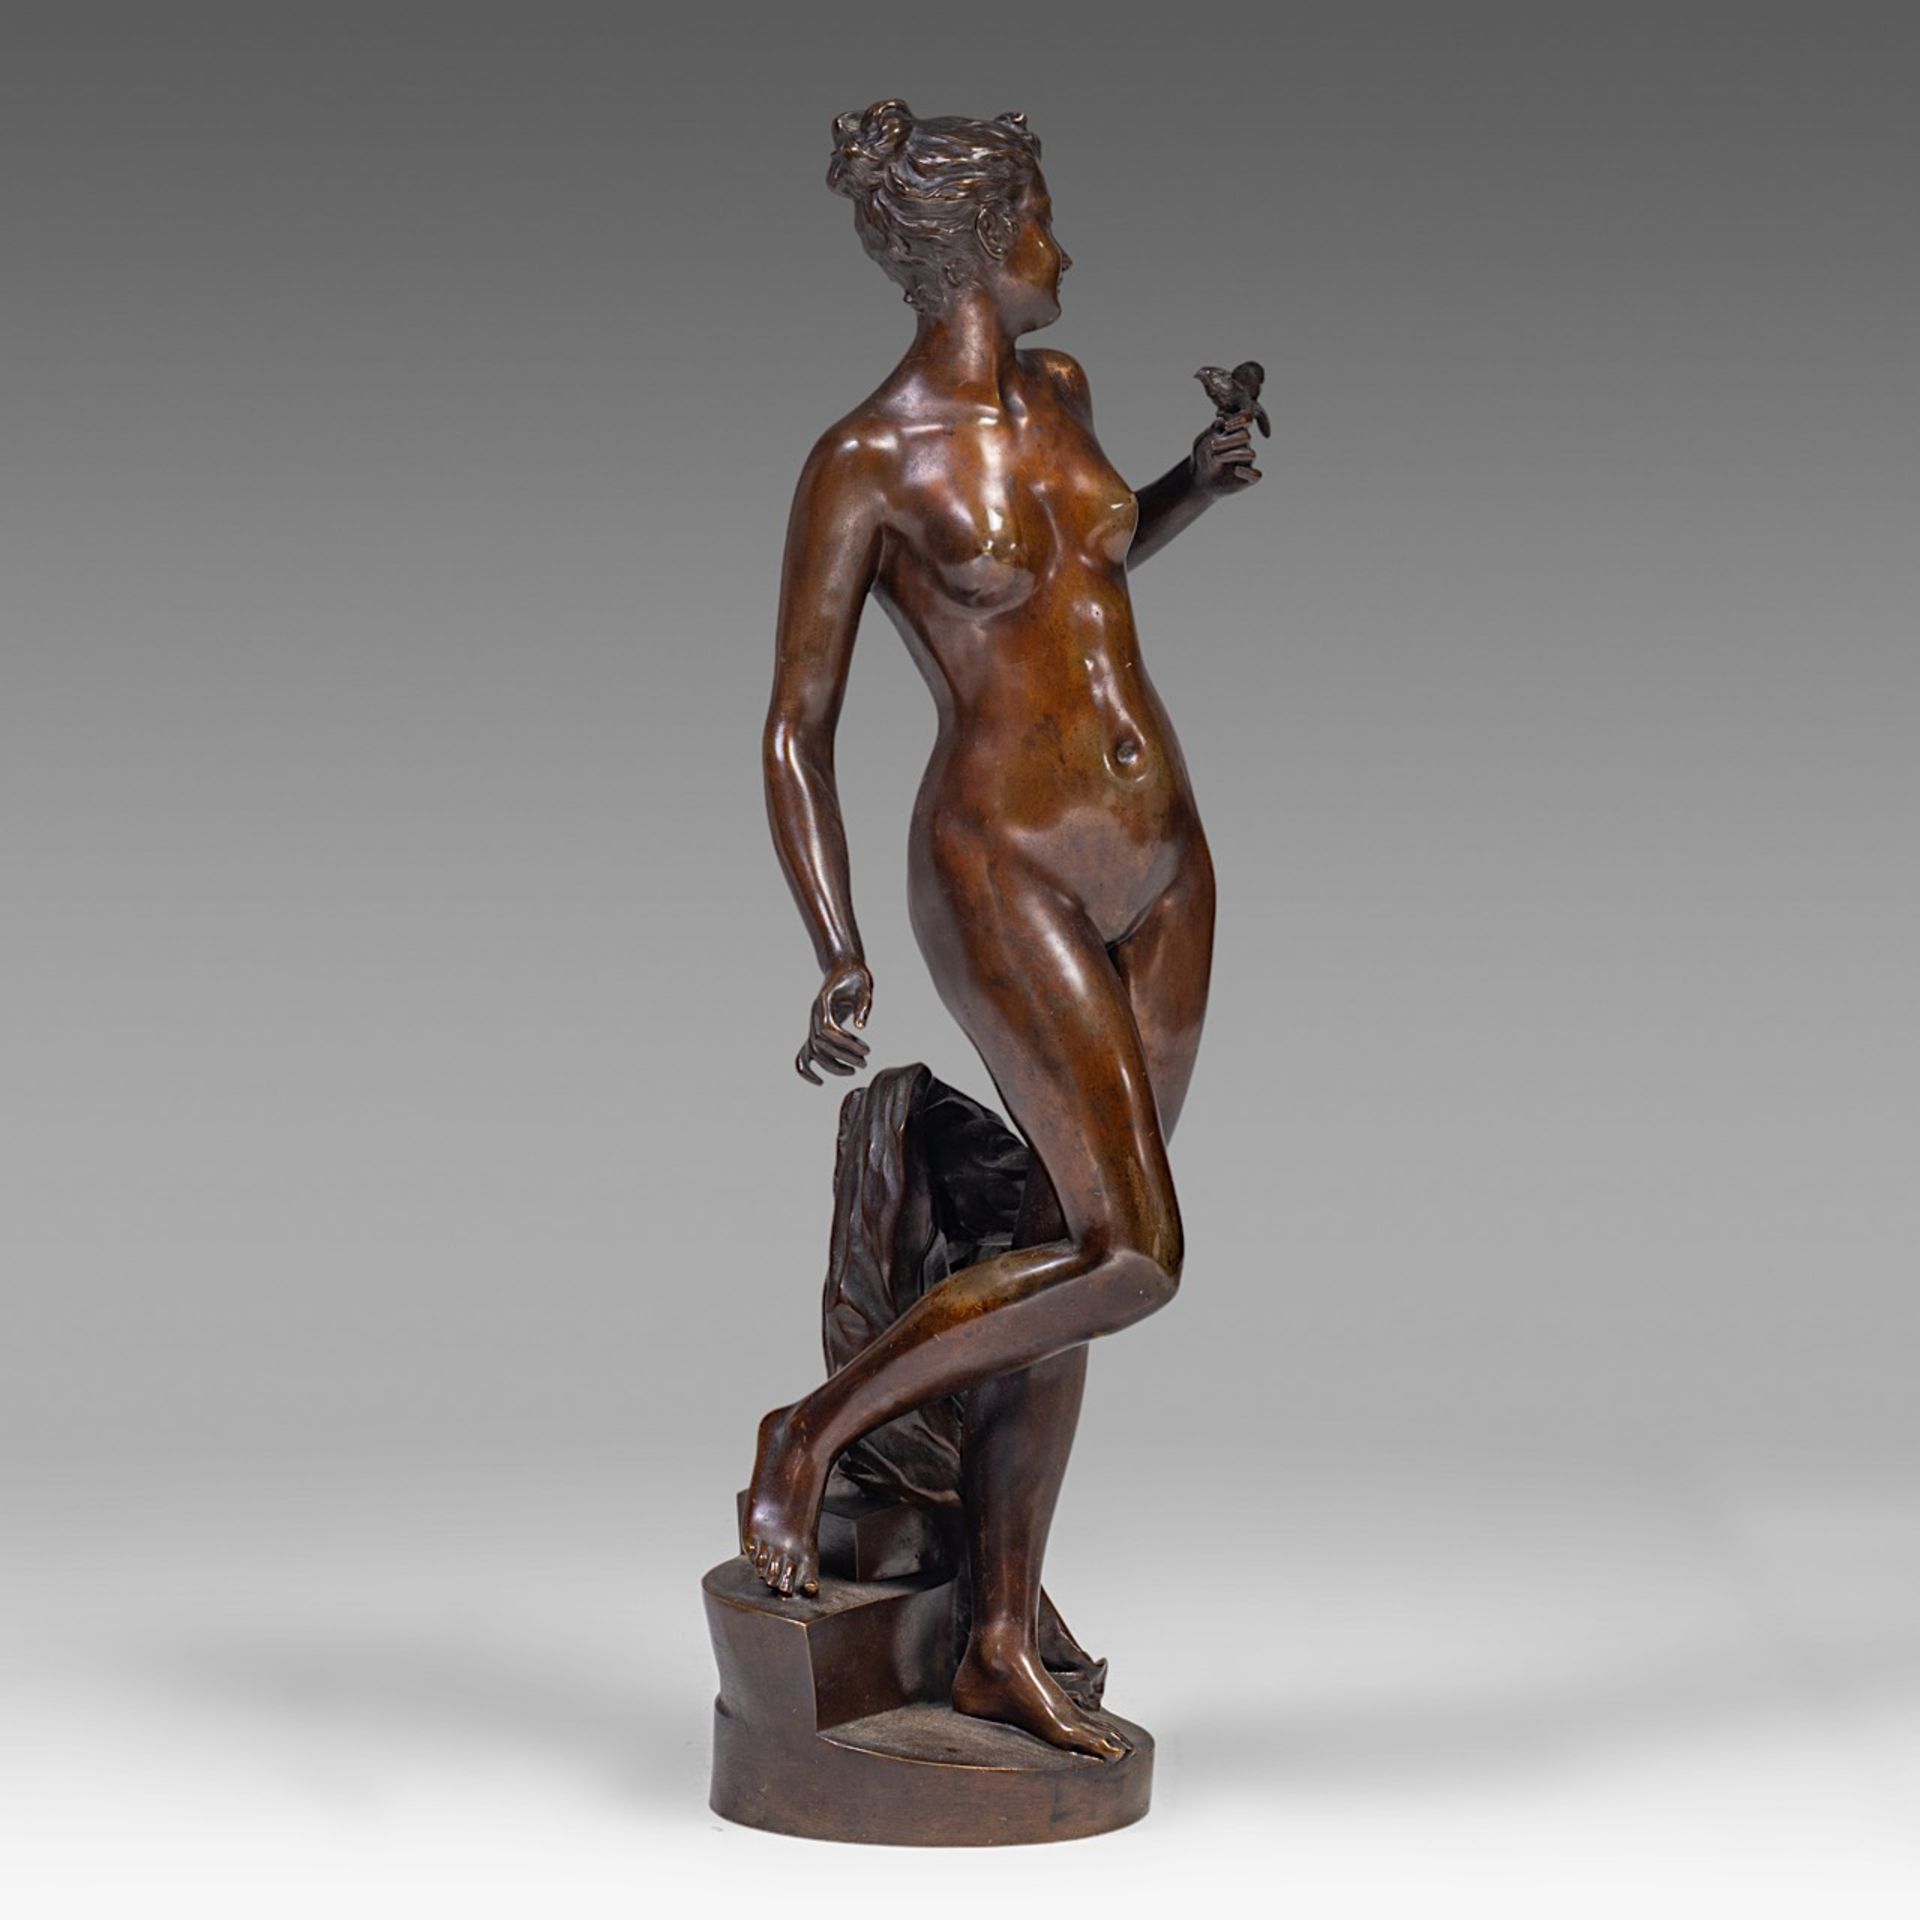 Signed 'Telemaque', Venus with bird, patinated bronze, H 75 cm - Image 6 of 10